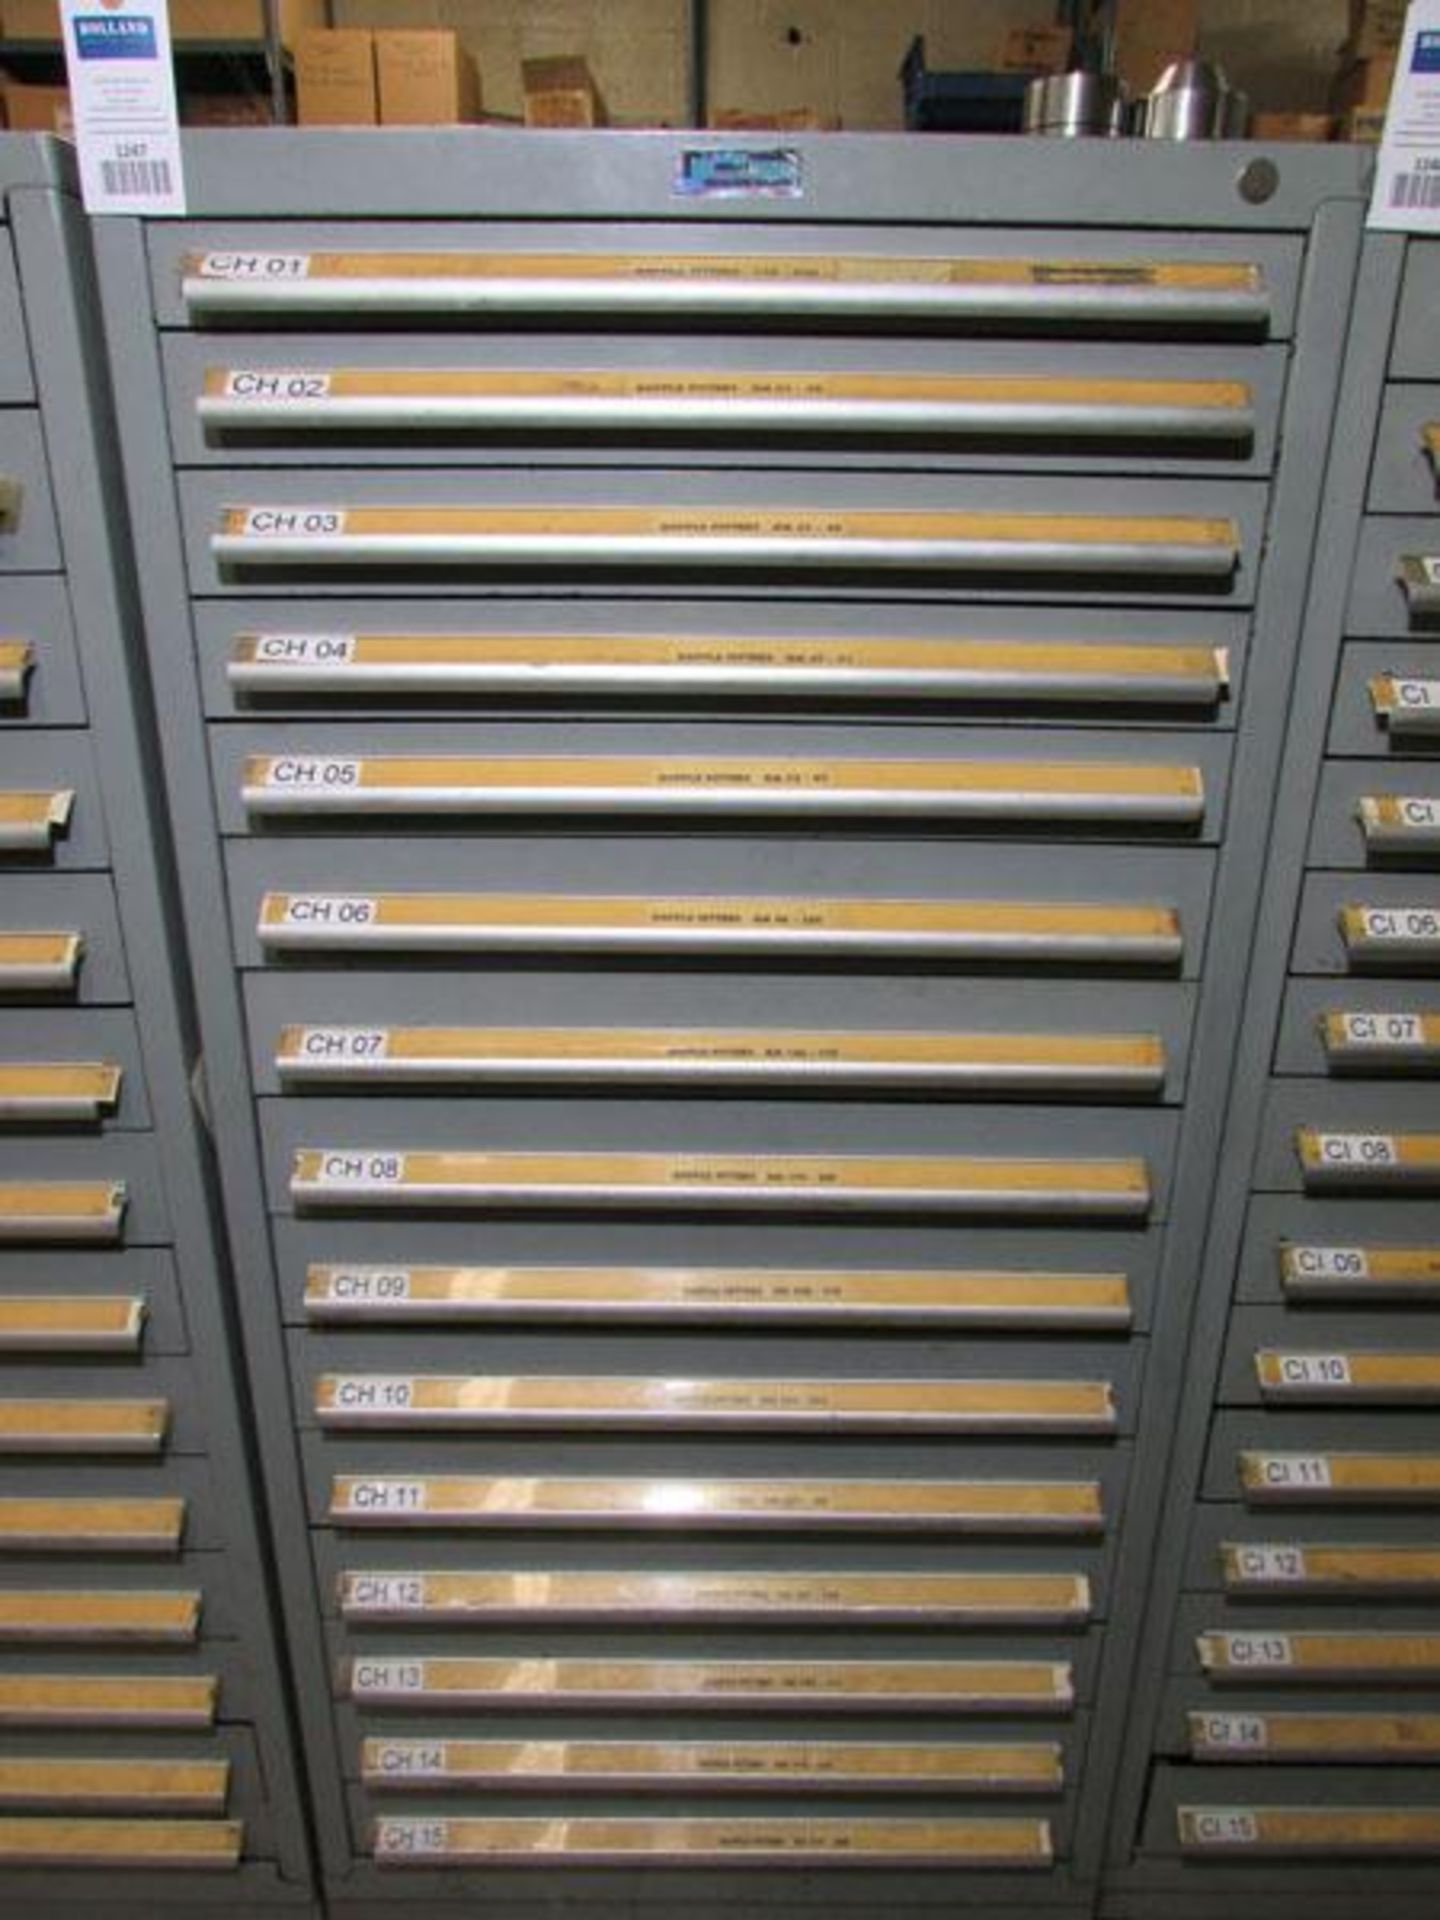 Rack Engineering Co Nu-Era Modular Drawer System 15-Drawer Heavy Duty Storage Cabinet - Image 2 of 2